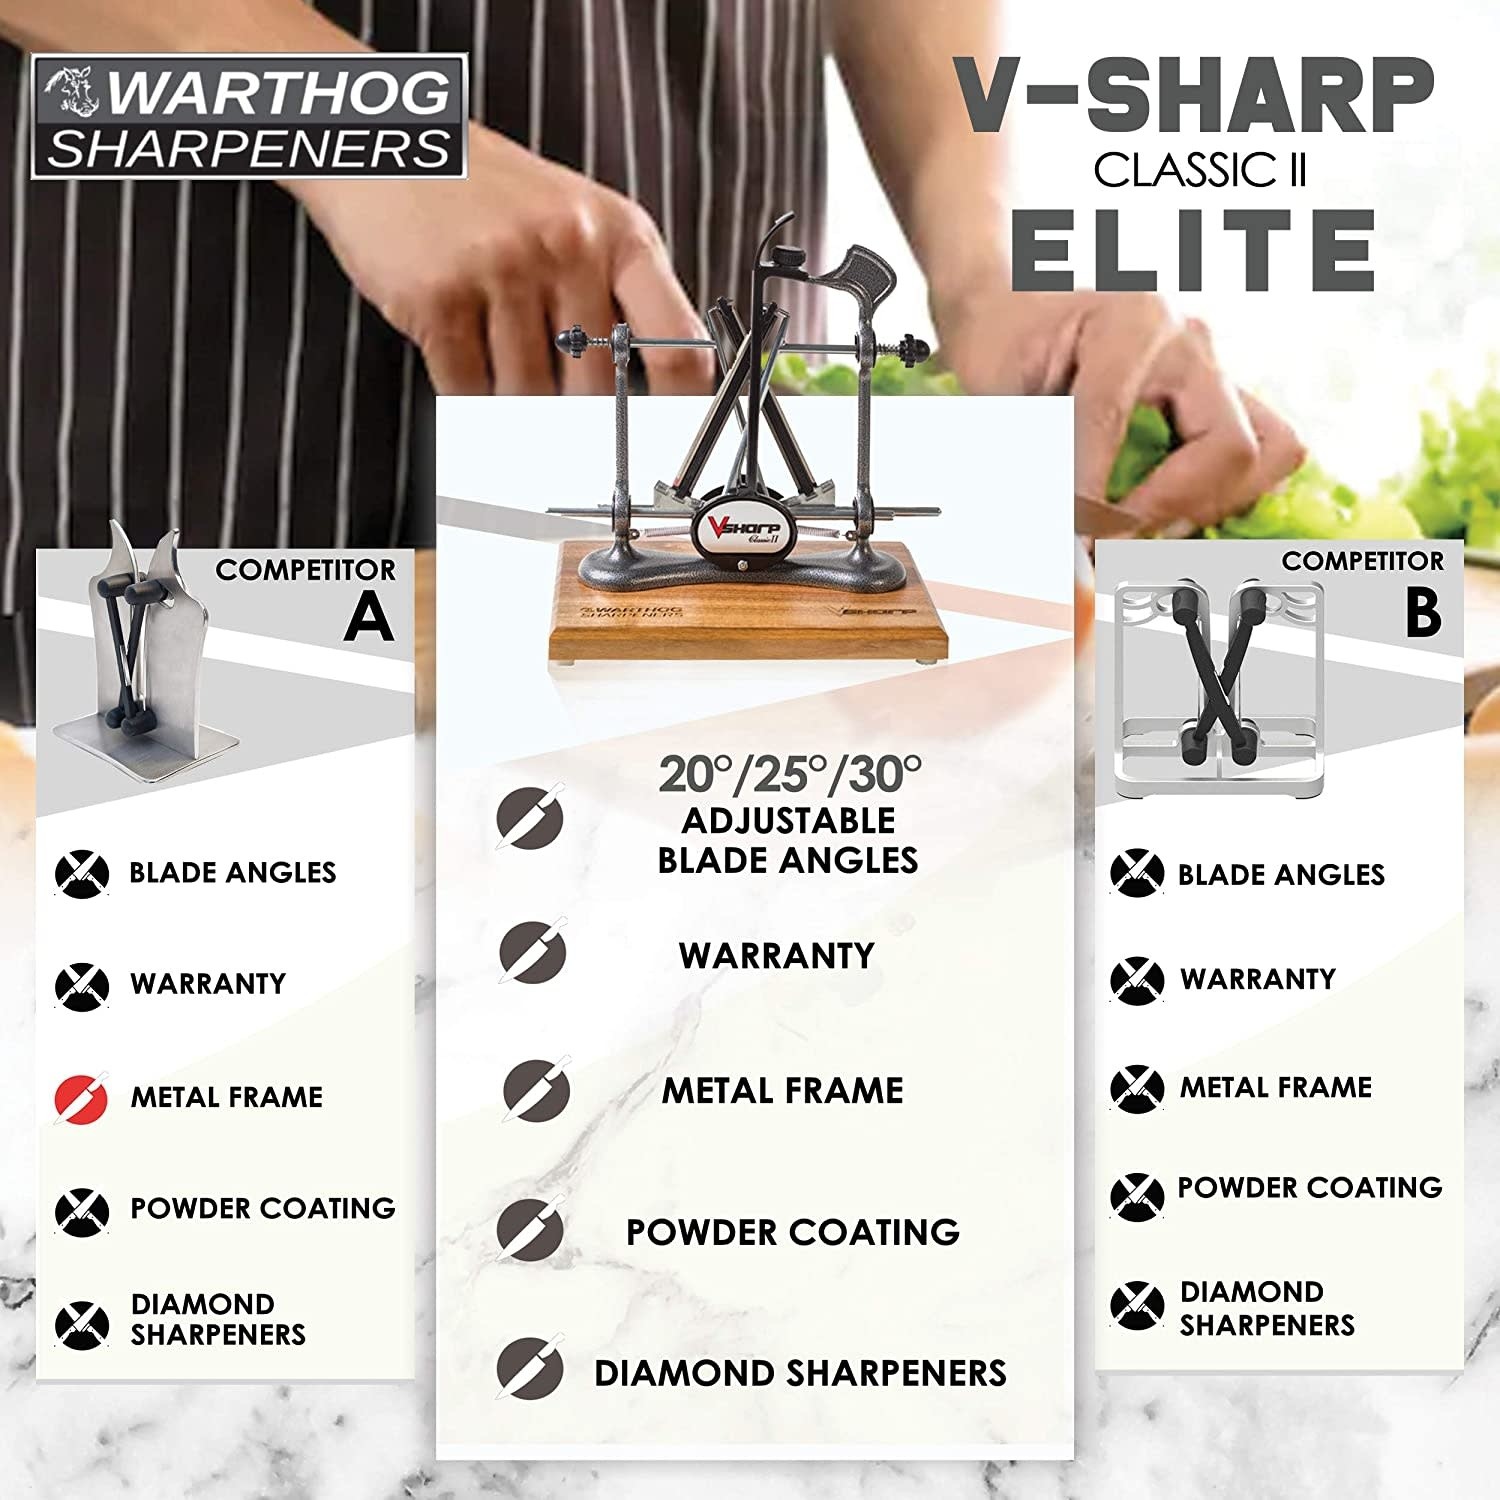 The Best Knife Sharpening System - VSharp Warthog Knife Sharpeners